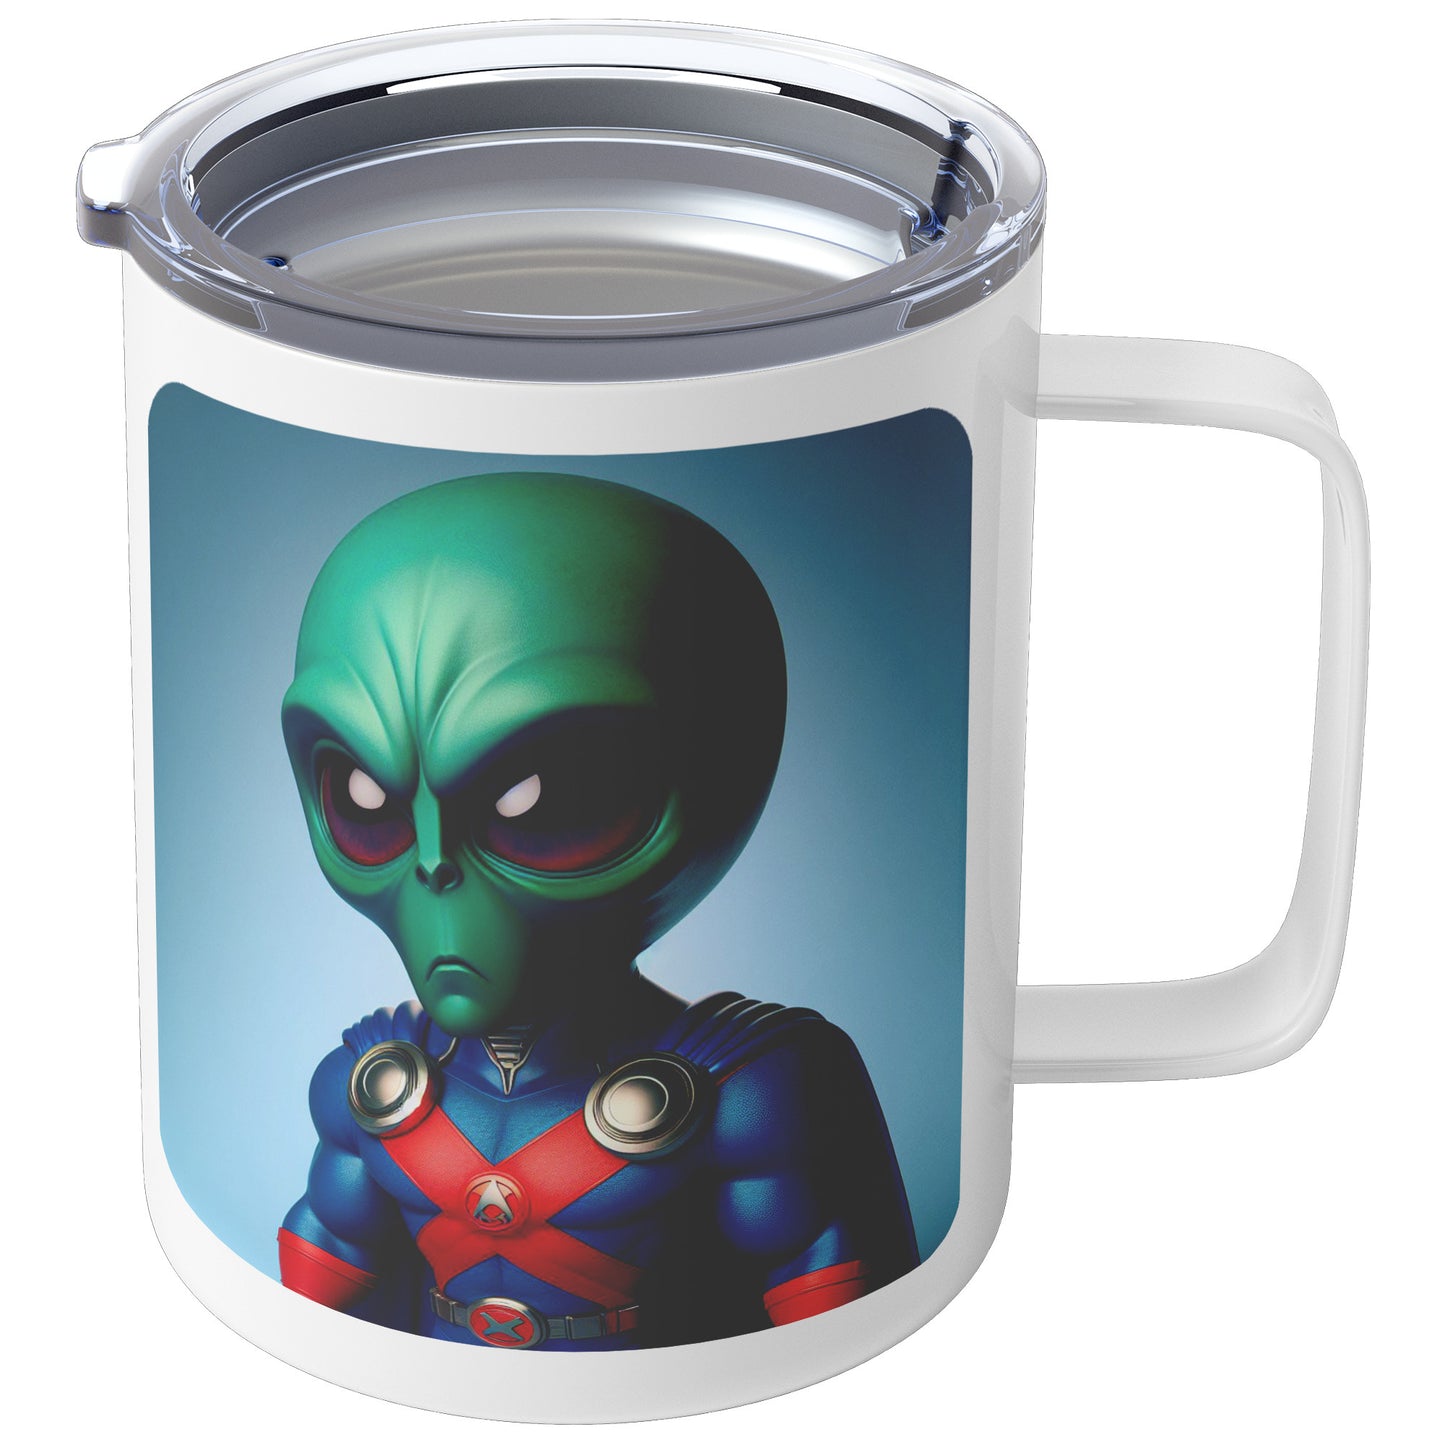 Martian Alien Caricature - Coffee Mug #11